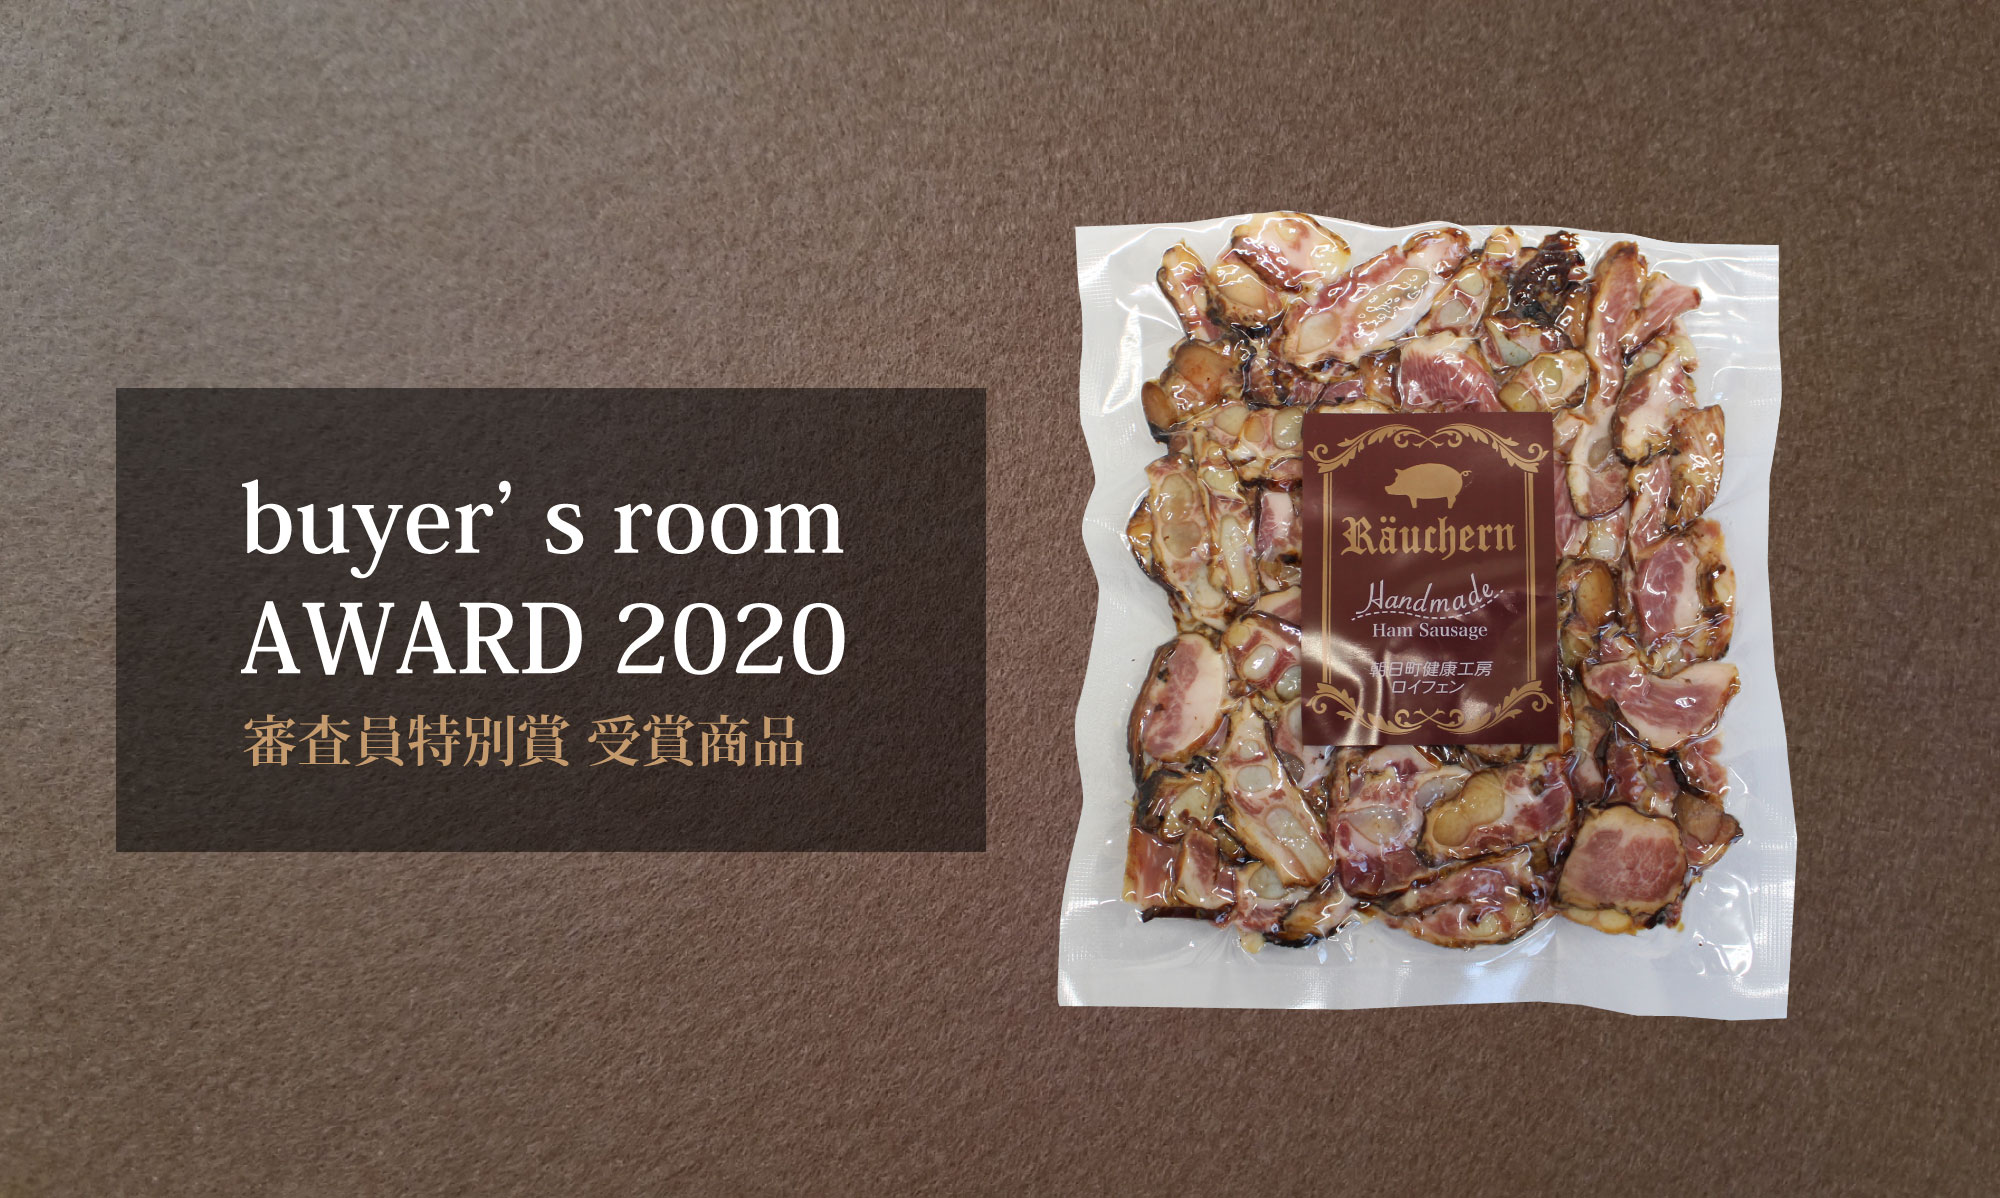 buyer's room AWARD 2020 審査員特別賞 受賞商品 骨付きバラスモーク